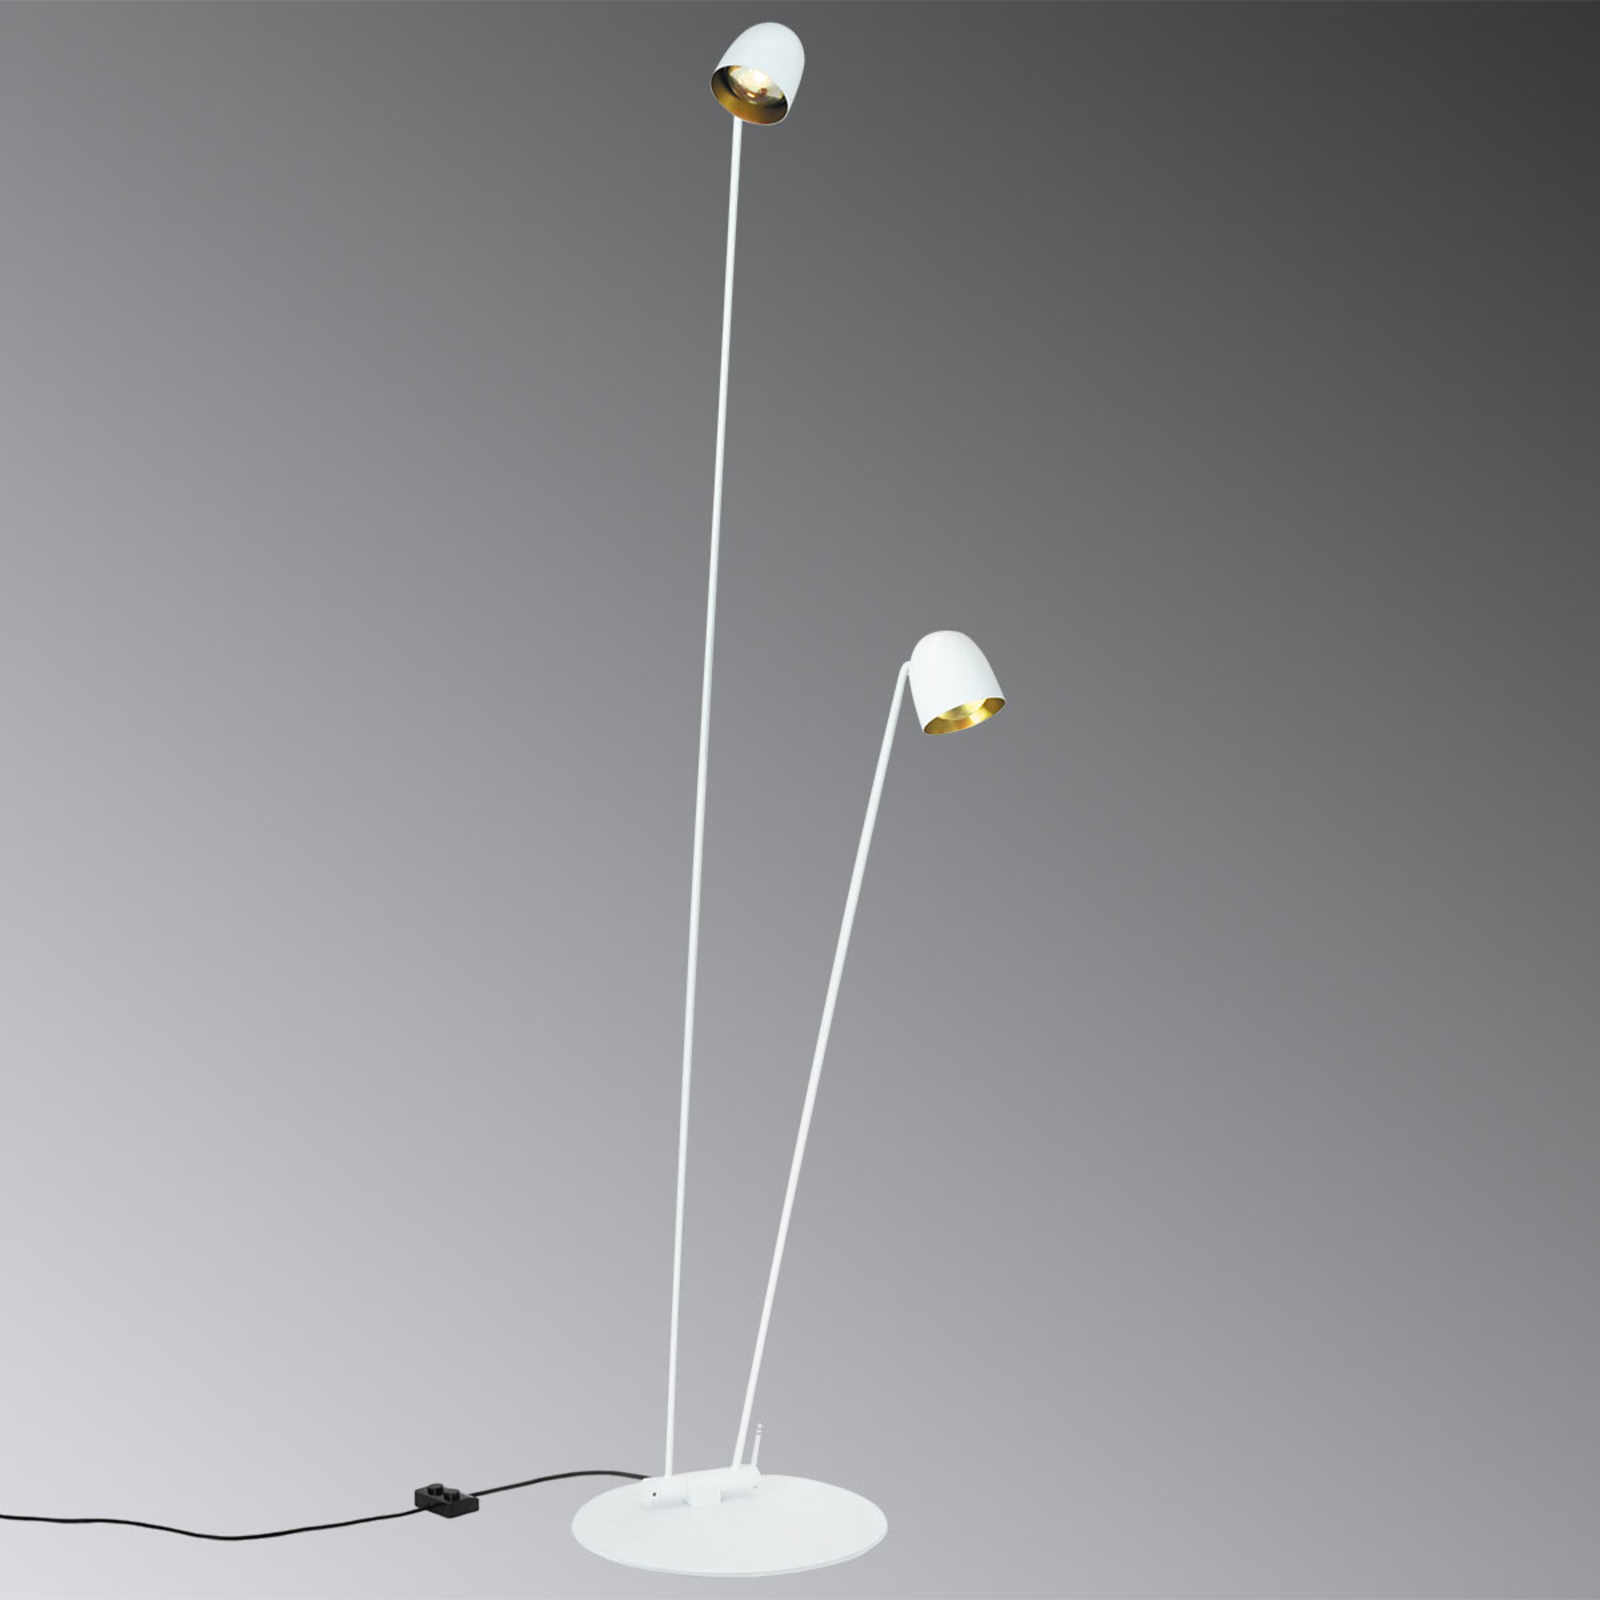 Flexibel instelbare LED vloerlamp Speers F wit